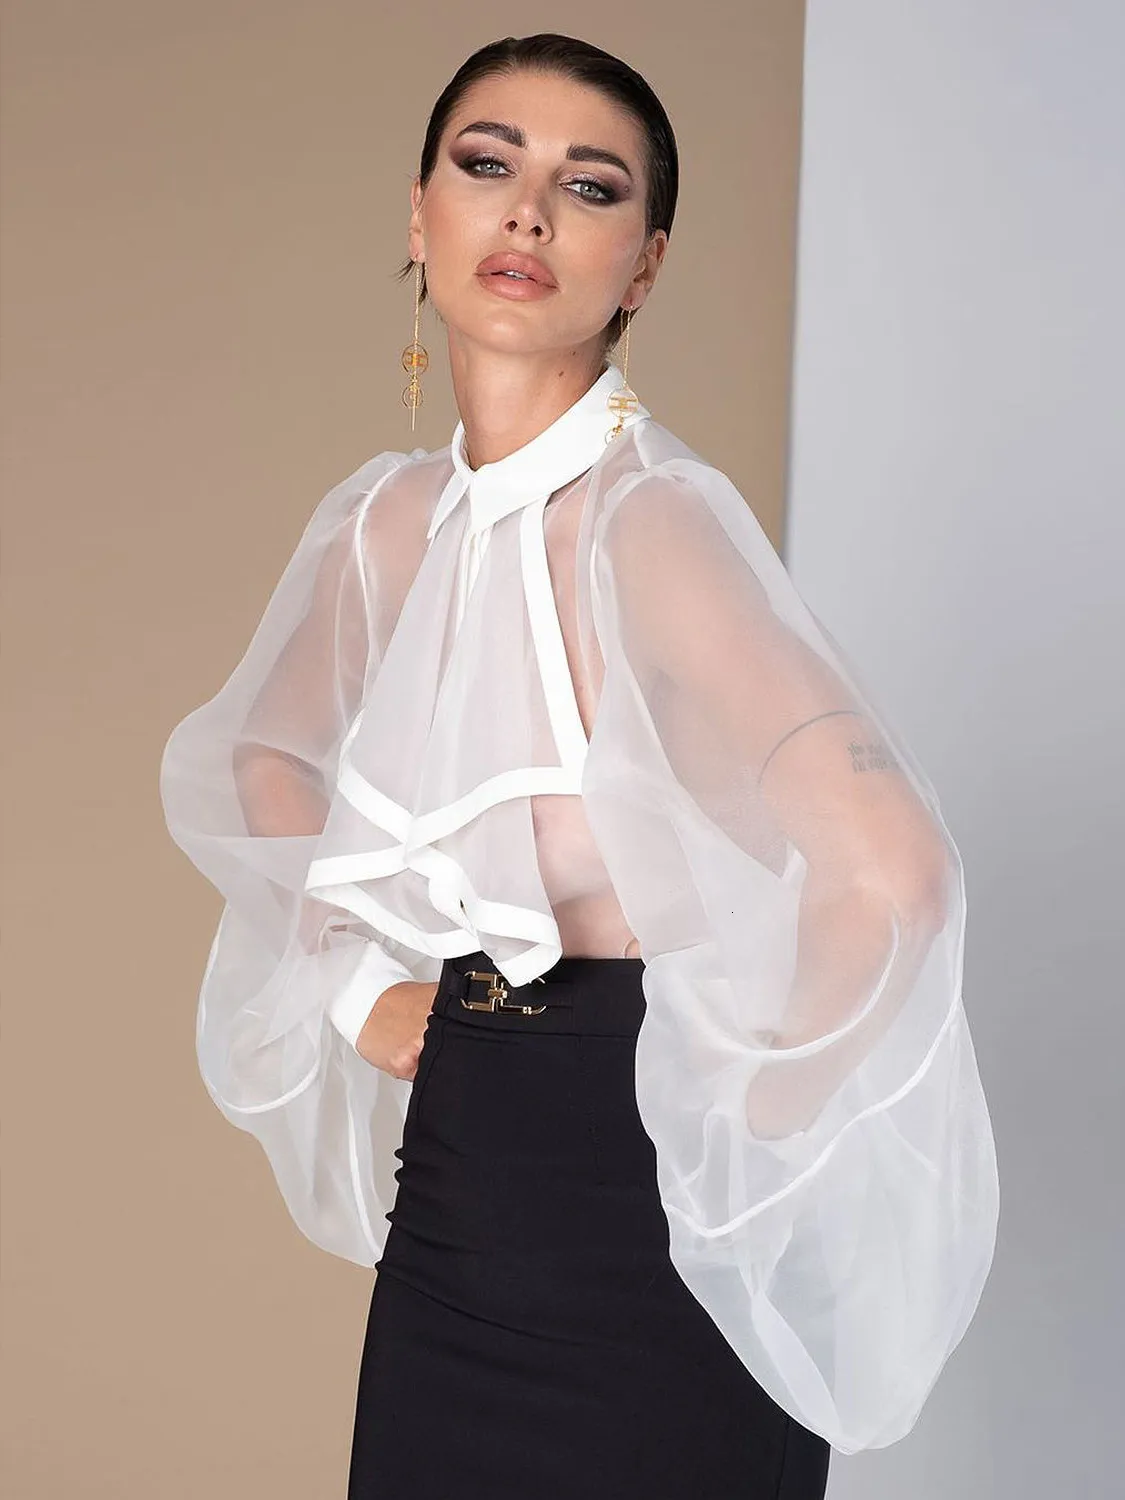 Women's Hoodies Sweatshirt Mesh Sheer Blouse Chiffon Seethrough Long Sleeve Top Shirt Fashion Organza Transparent White Female Blusas 230823